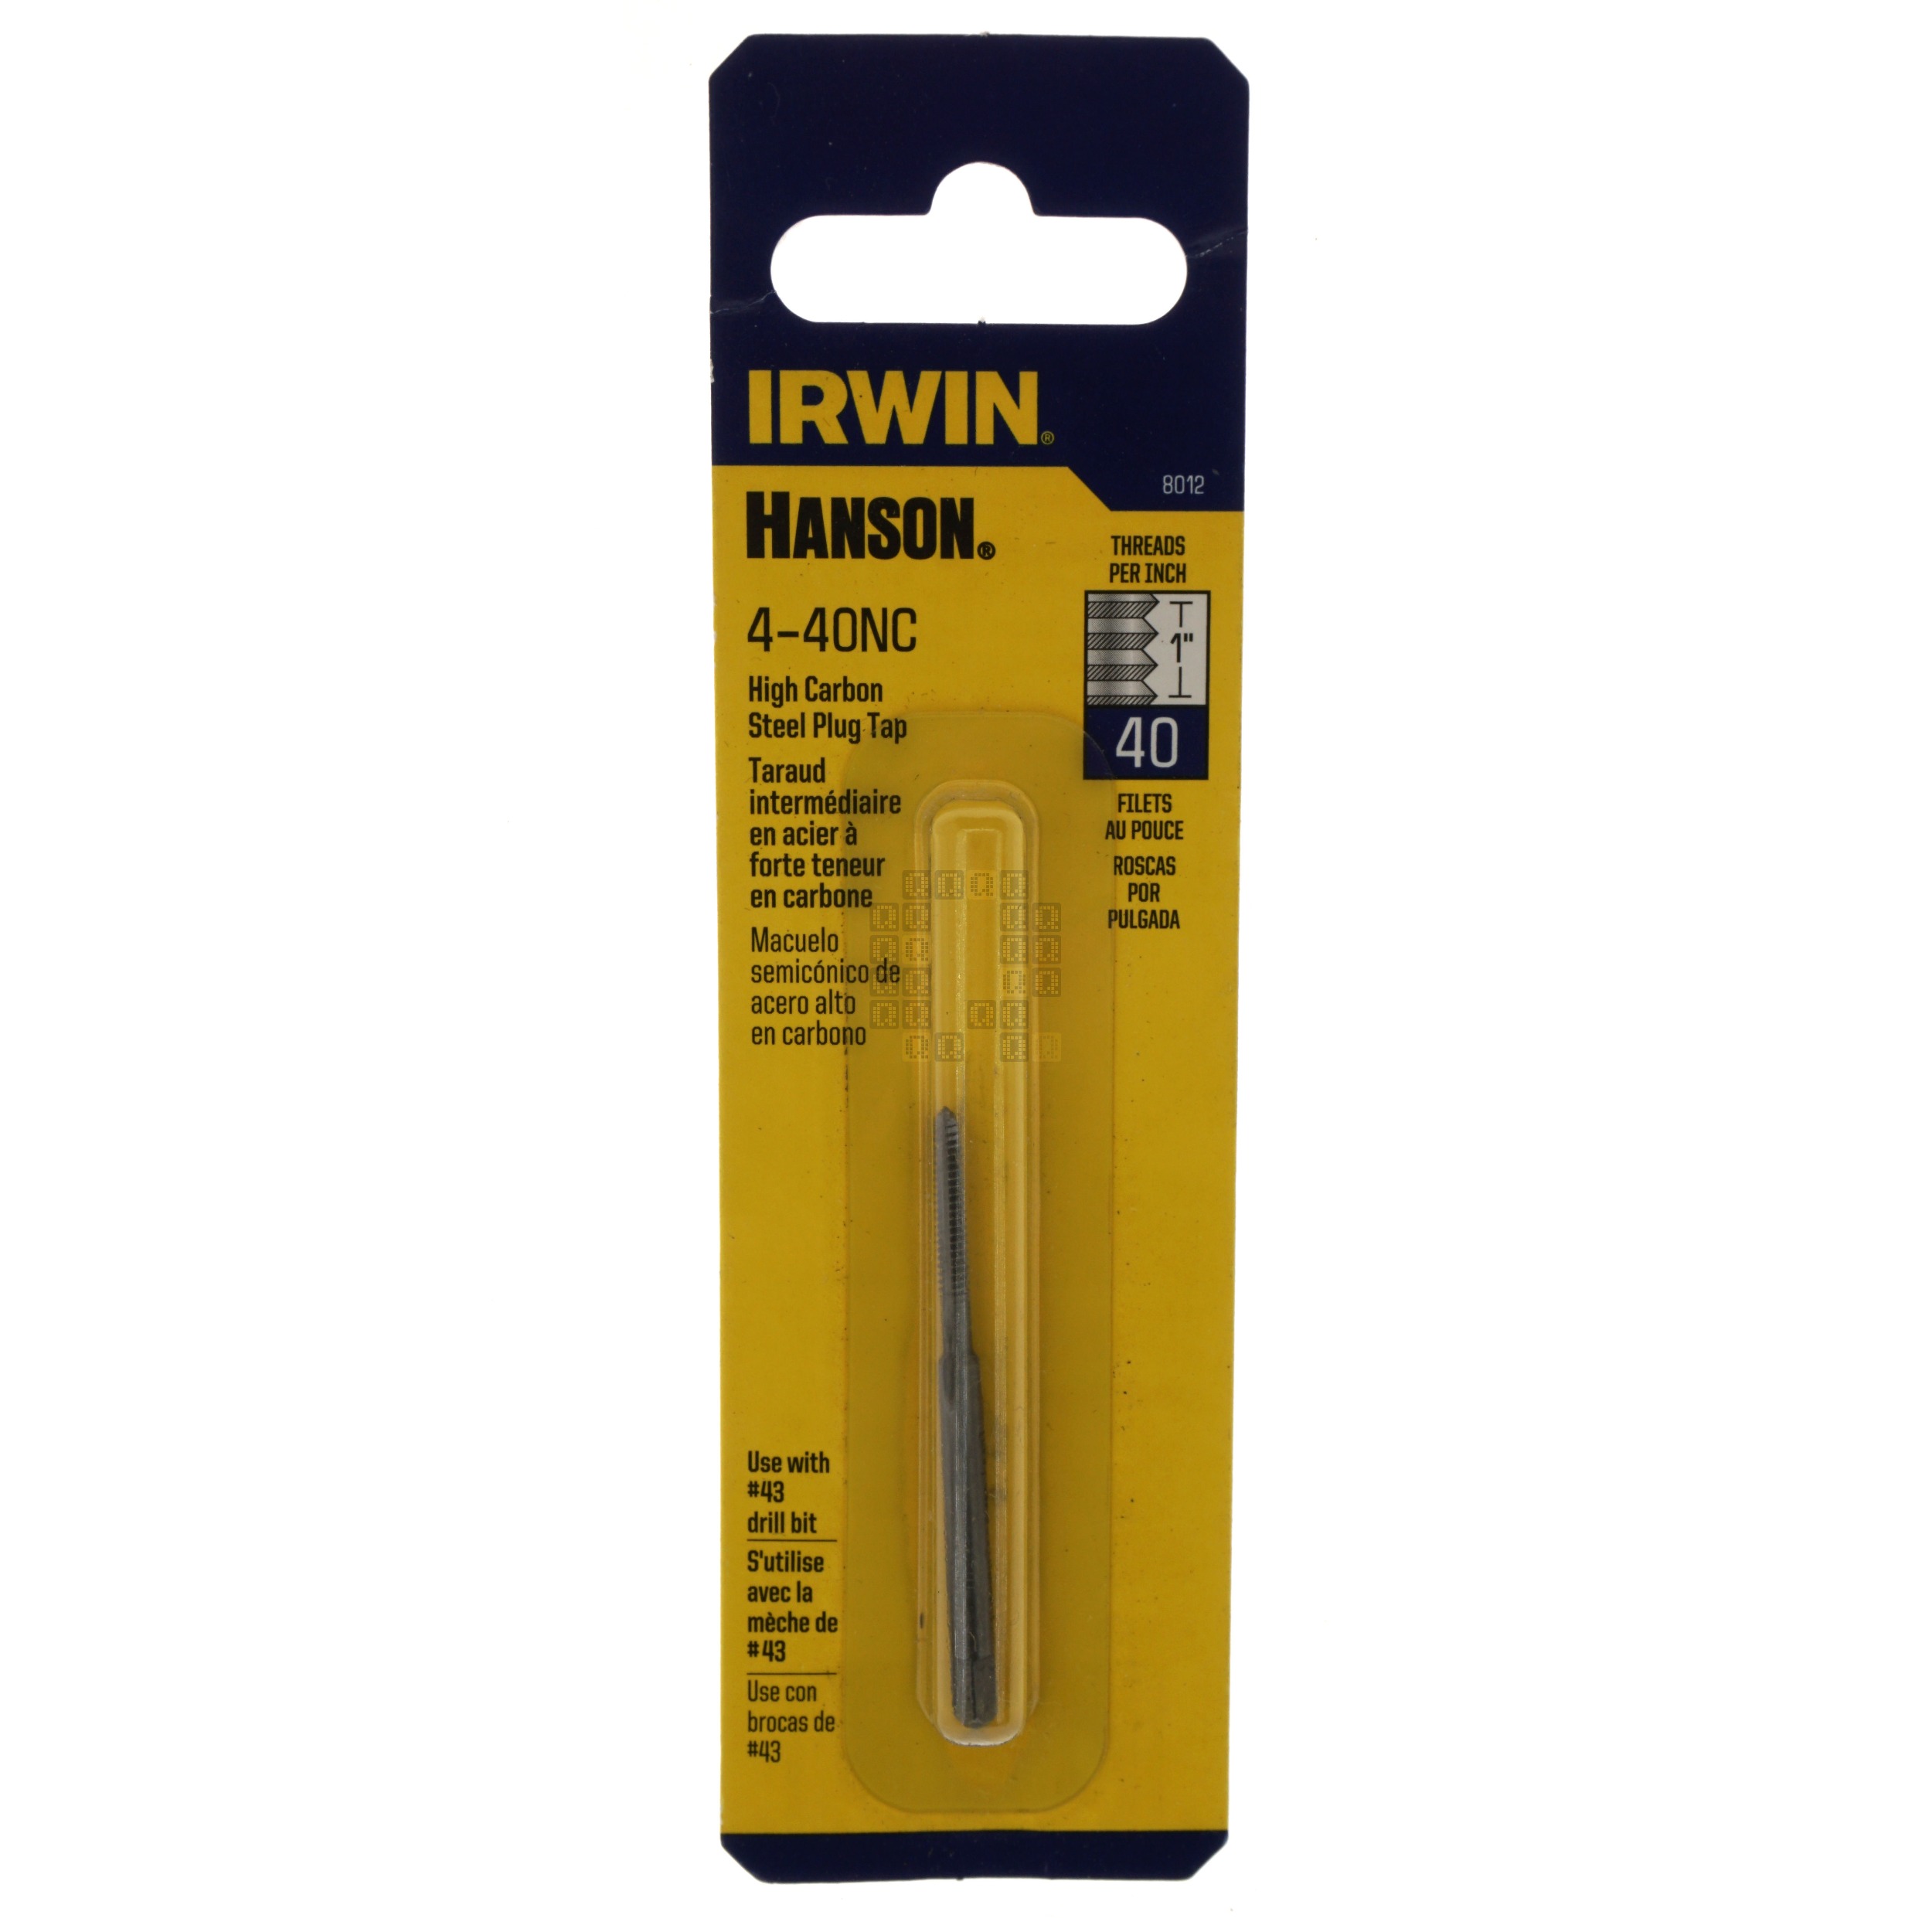 Irwin Hanson 8012 #4-40NC High Carbon Steel Plug Tap